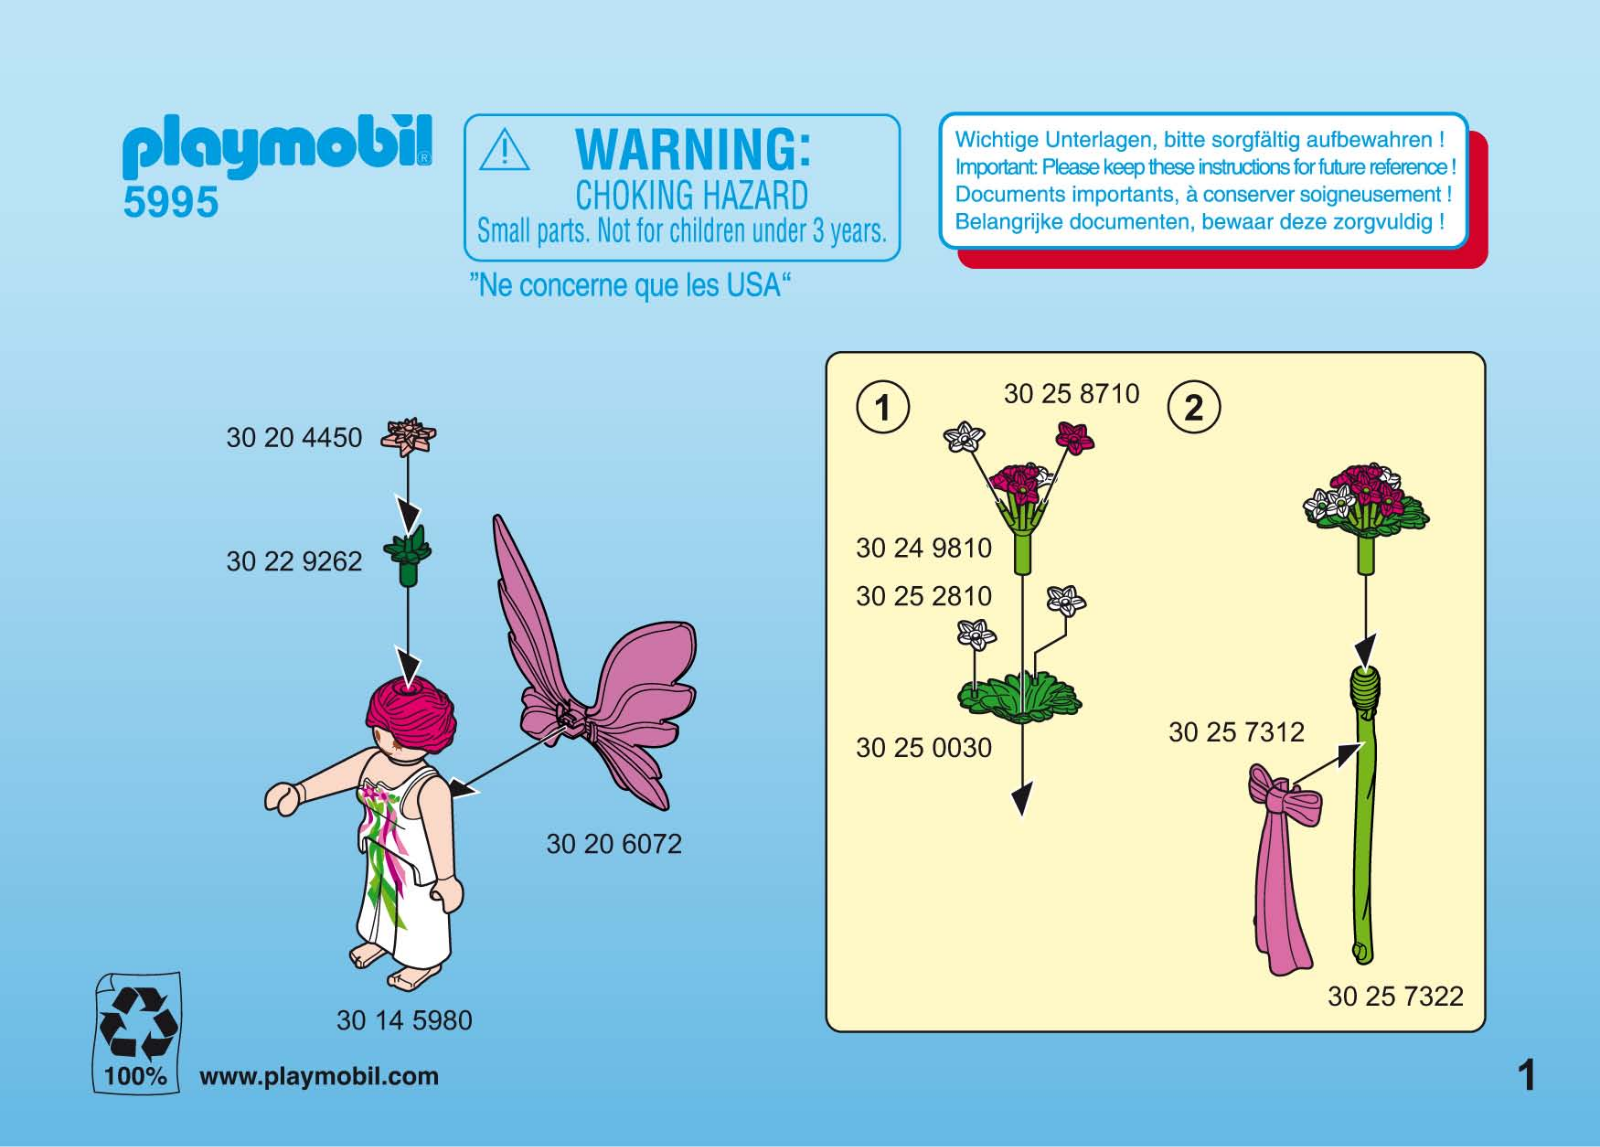 Playmobil 5995 Instructions